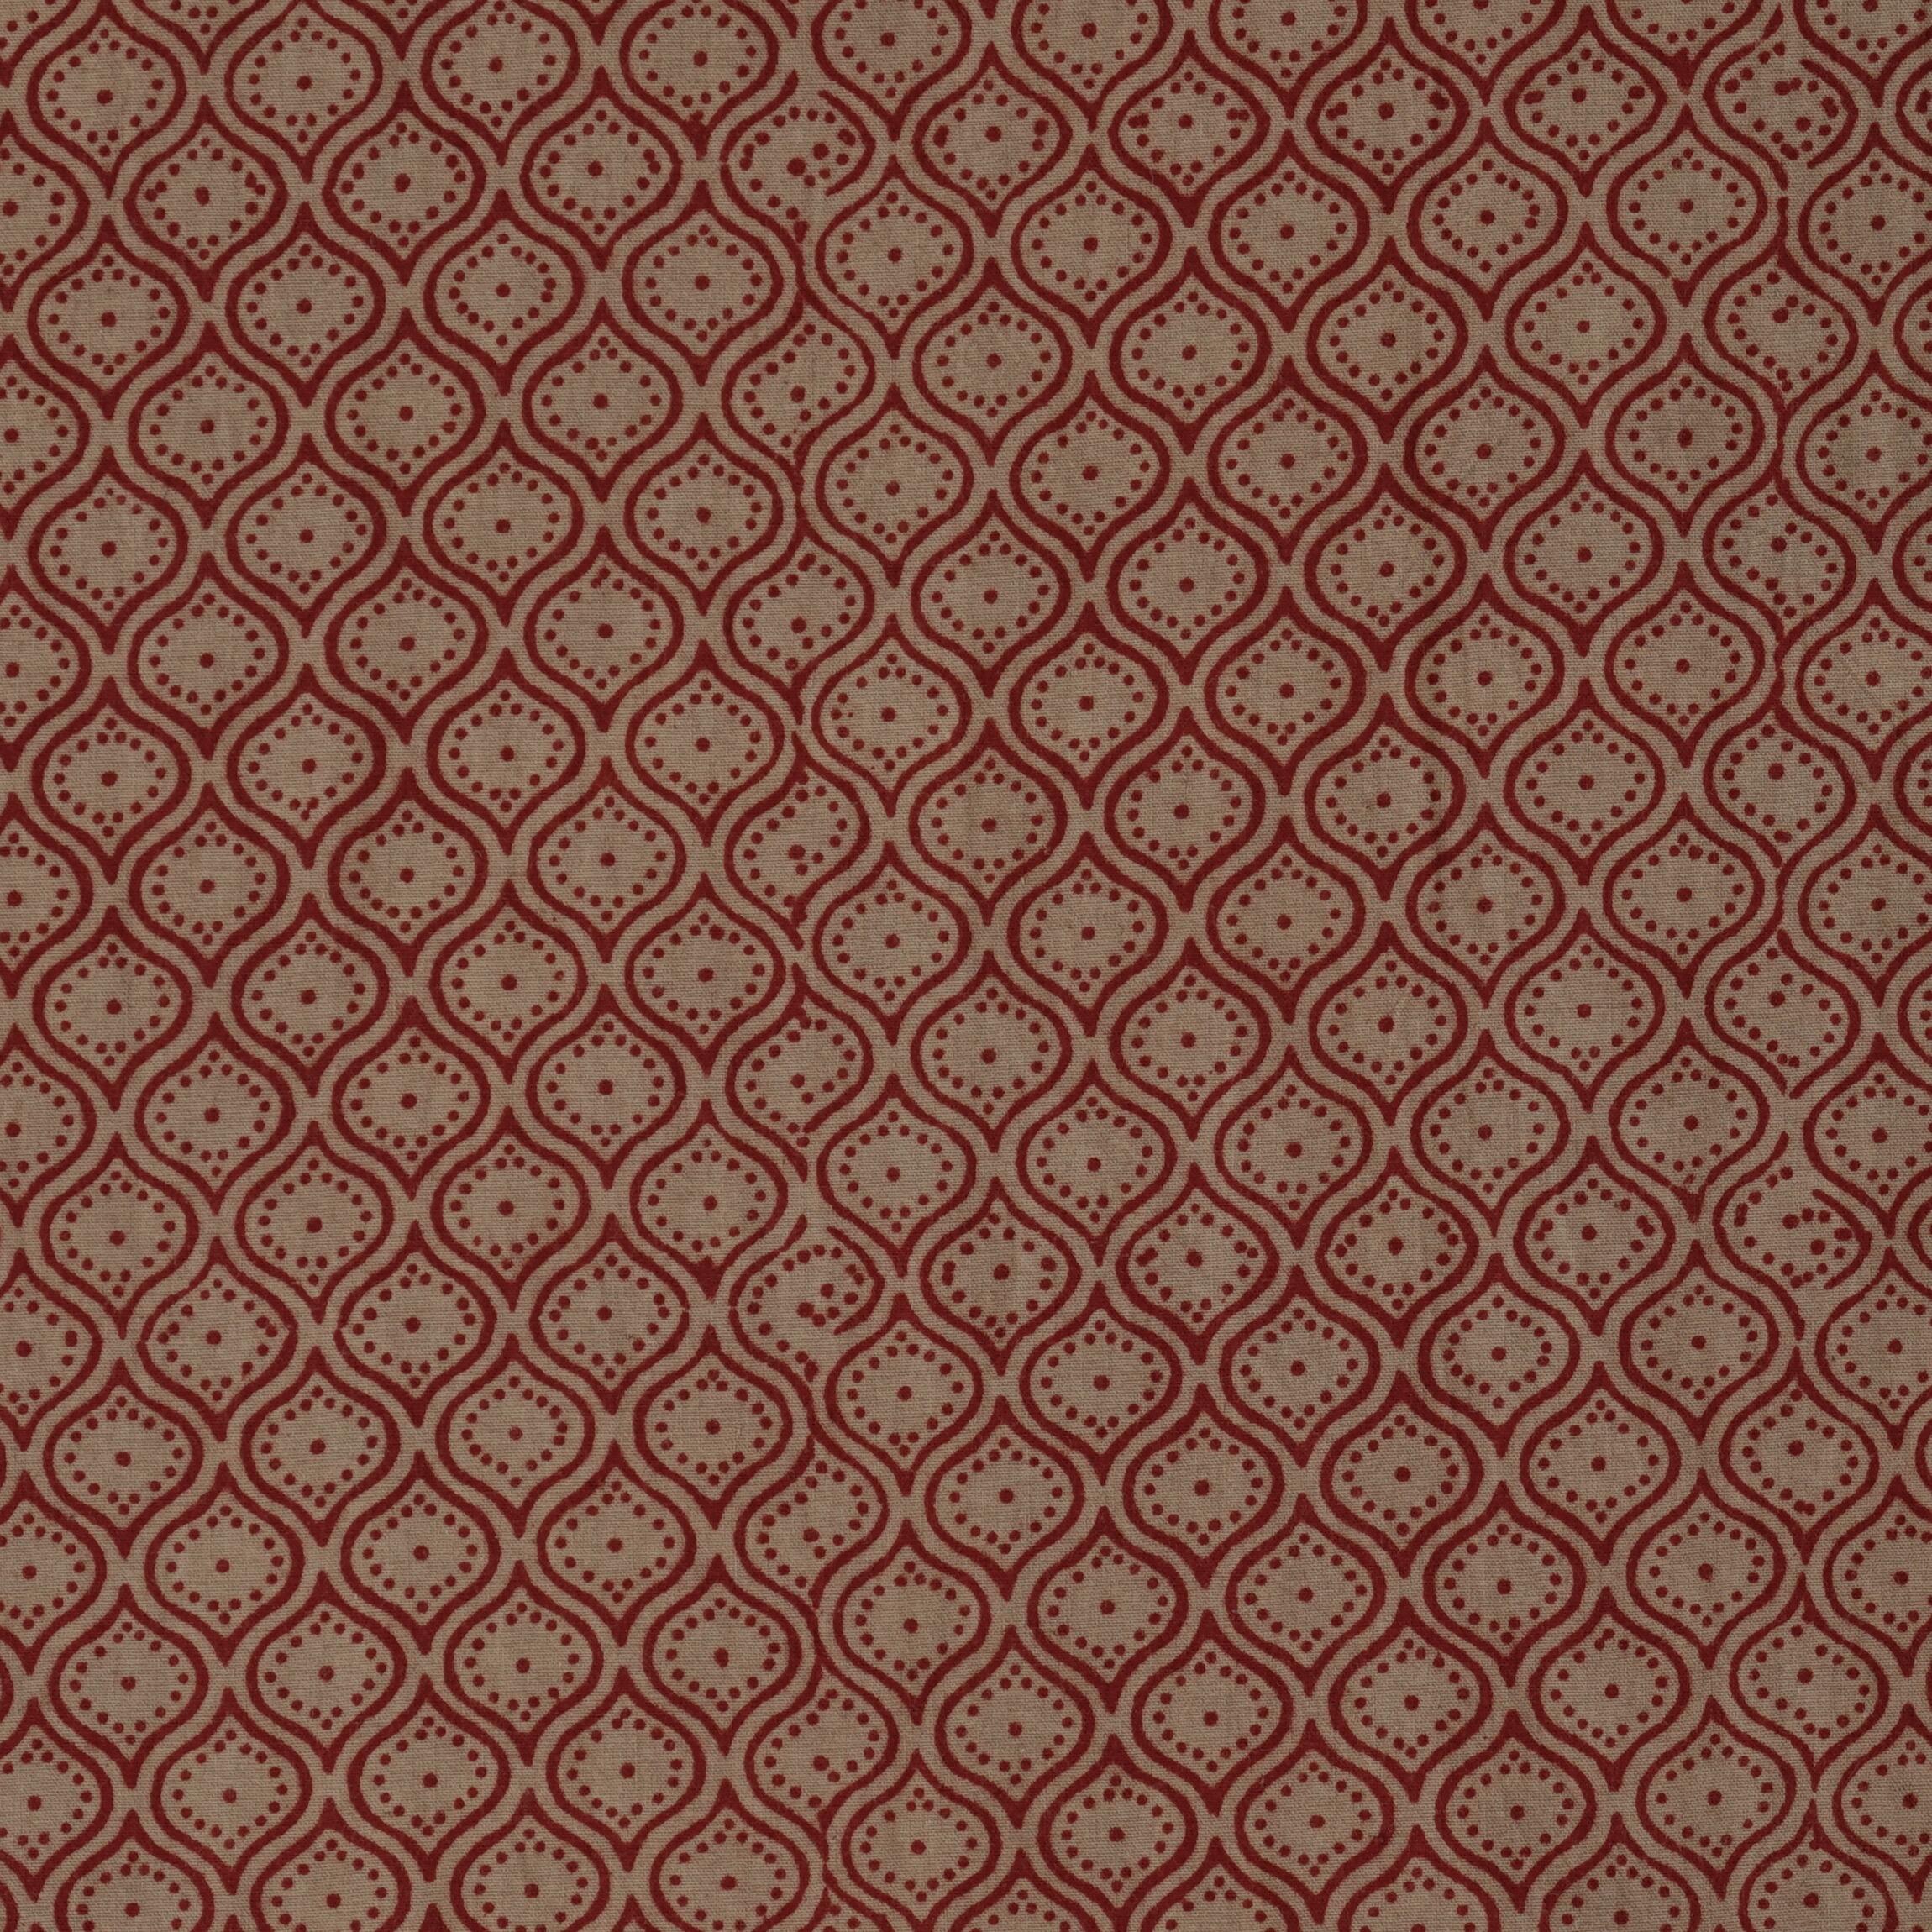 100% Block-Printed Cotton Fabric From India- Bagh - Alizarin Red & Indigosol Khaki - Moreish Dops Print - Flat